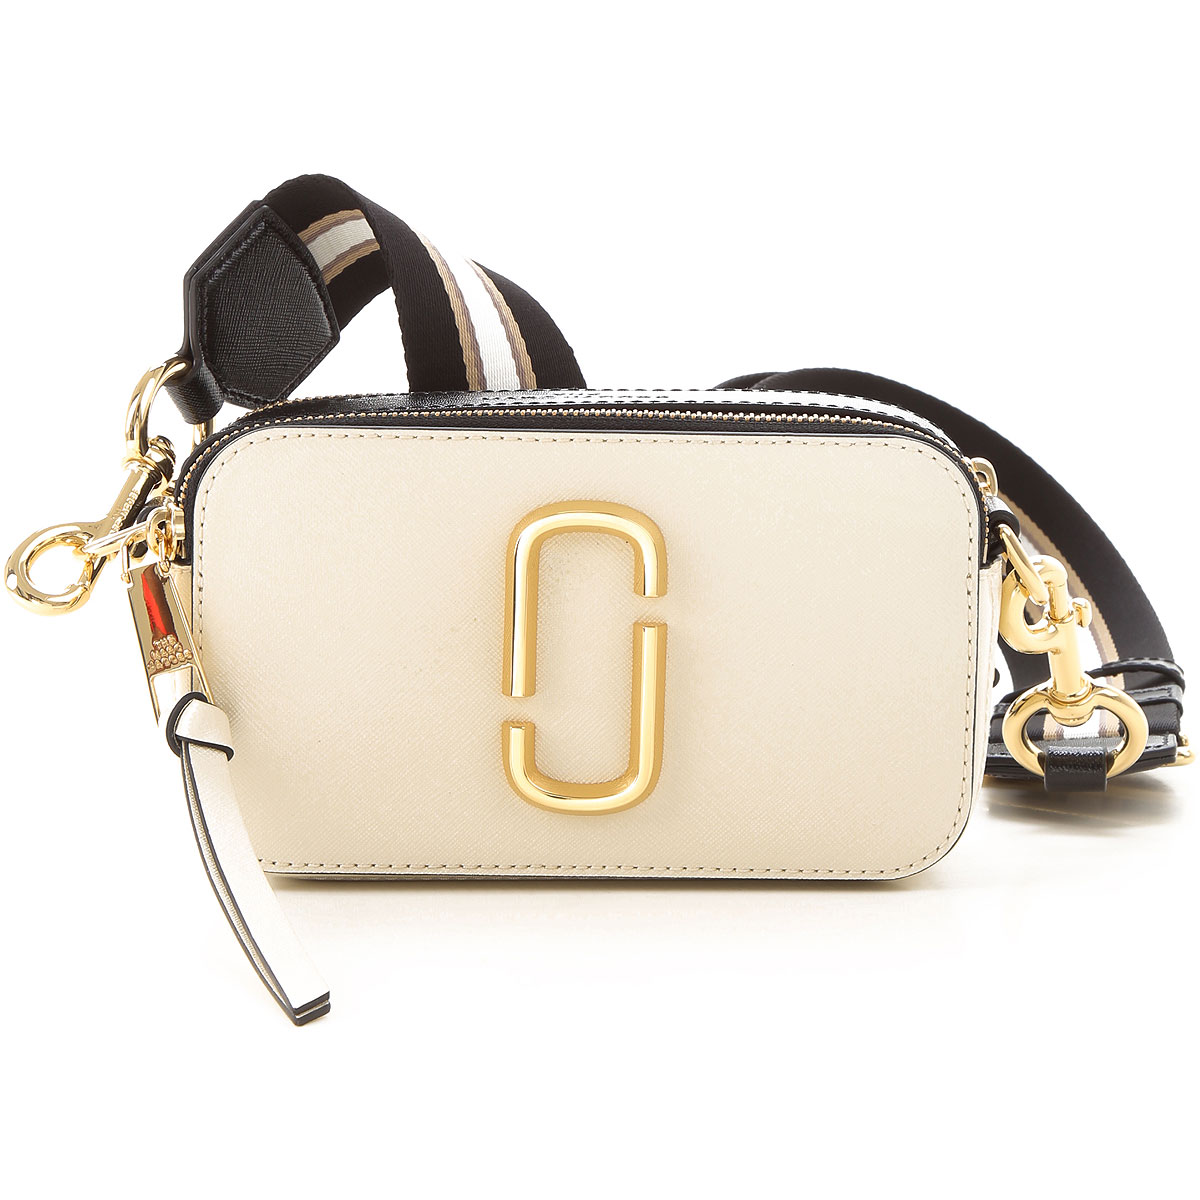 Handbags Marc Jacobs, Style code: m0012007-136-C50